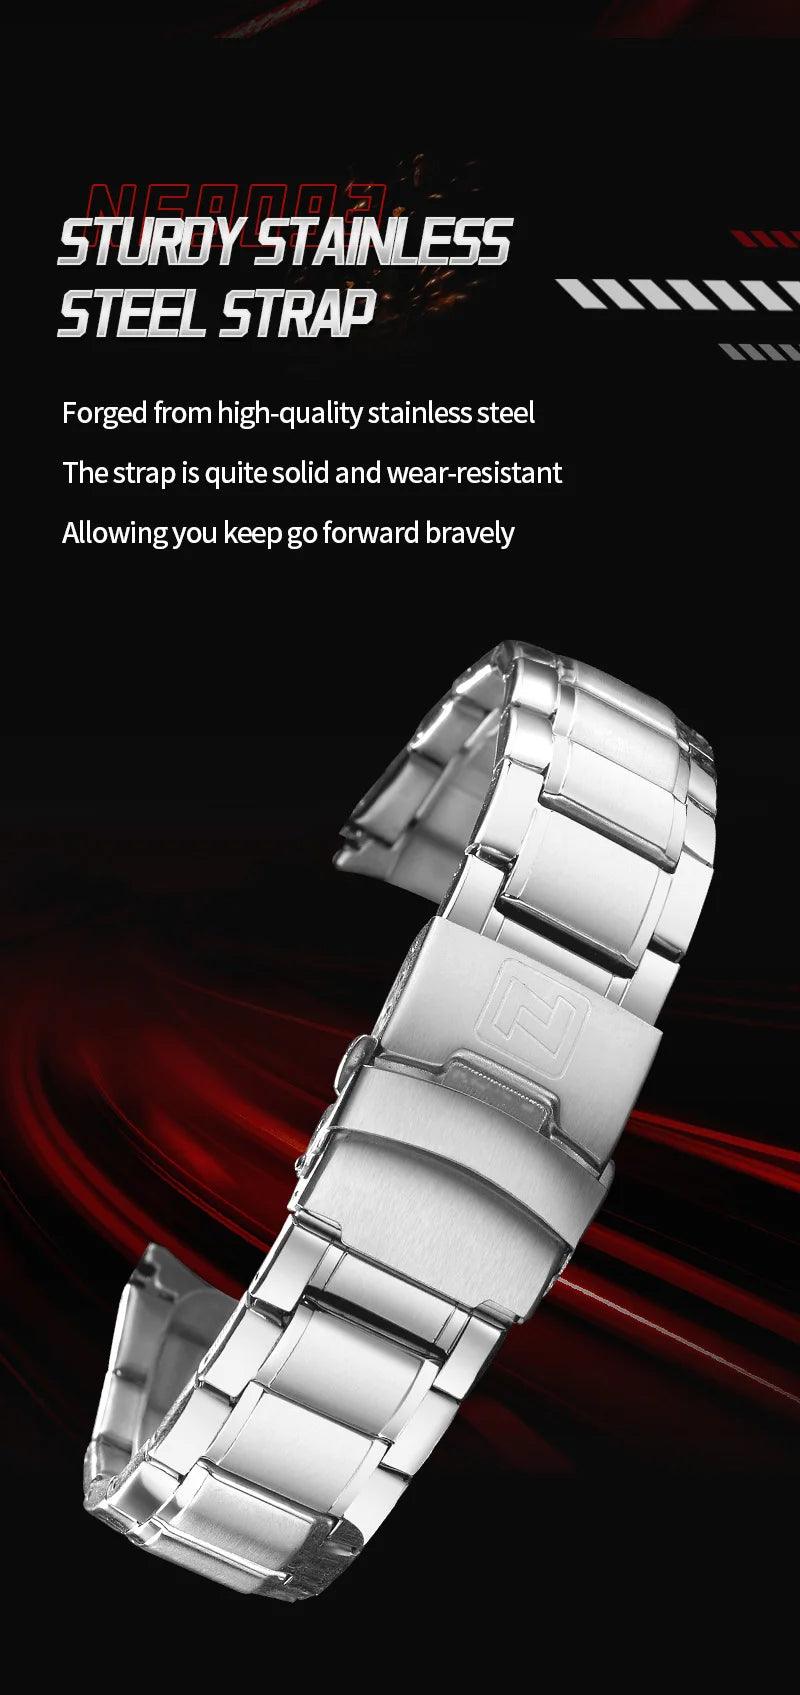 Top Brand Luxury Fashion Sport Quartz Analog Digital Waterproof Stainless Steel Men's Watches - Popular Choice - The Jewellery Supermarket